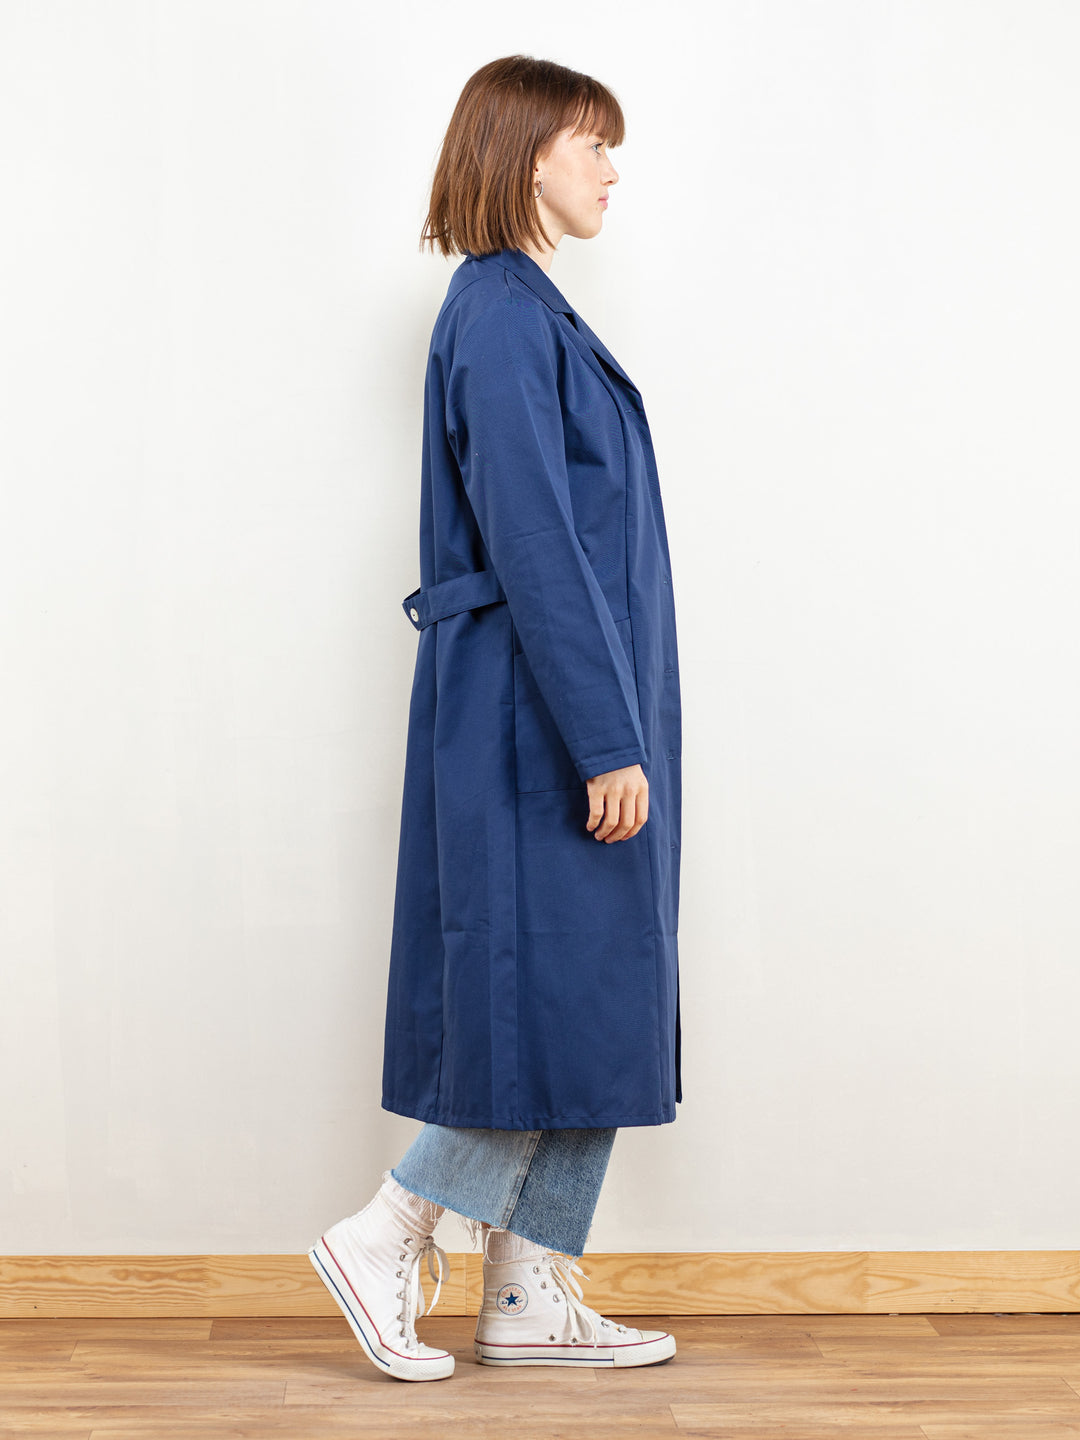 Vintage Chore Coat women cotton blend work coat blue artist coat manufacturer working coat women workwear 90s clothing size large